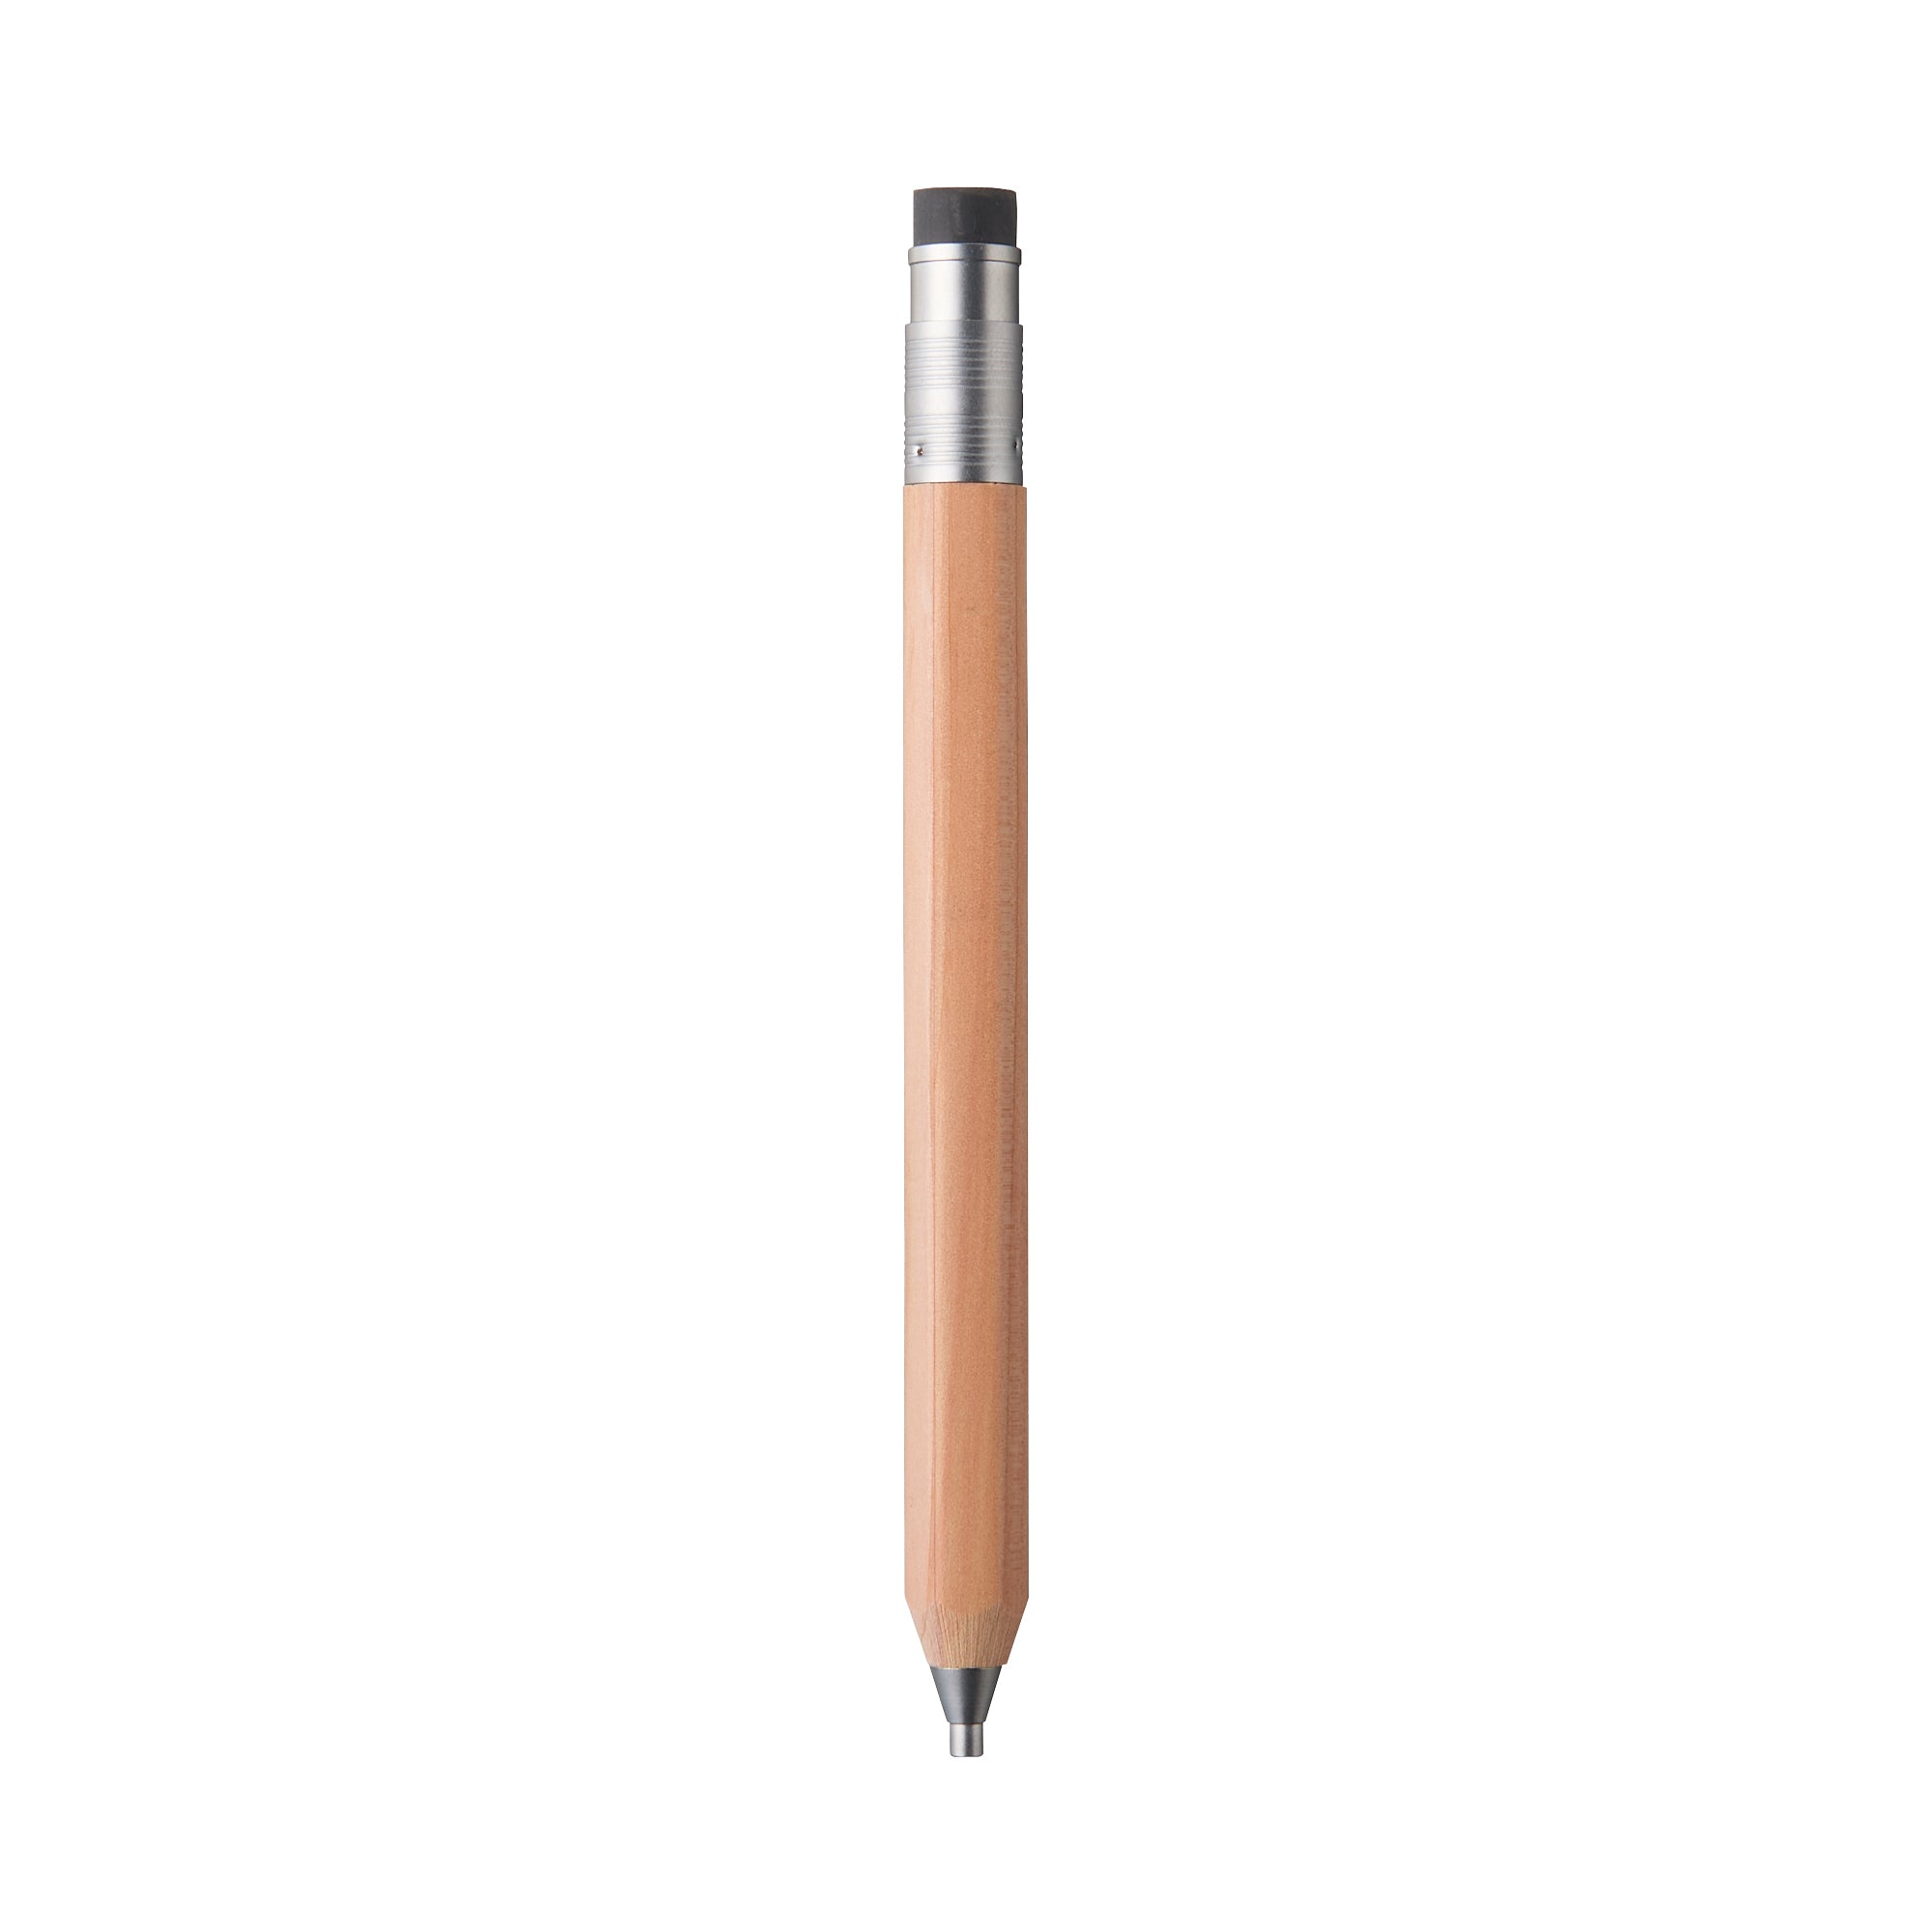 Wooden Mechanical Pencil 2mm HB